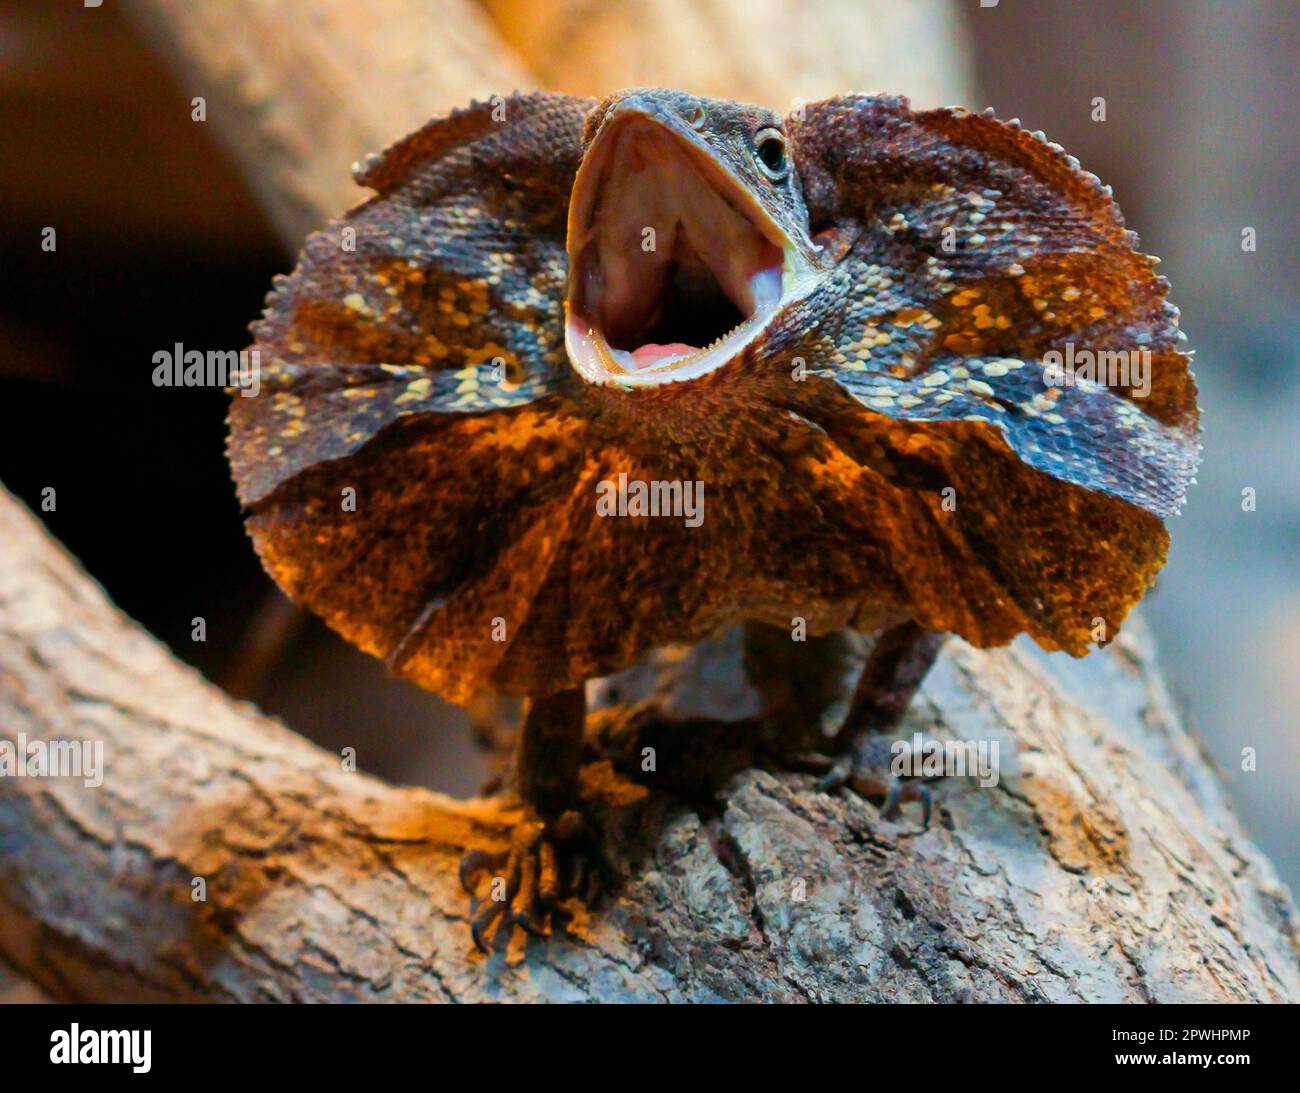 Collar lizard with upturned collar Stock Photo